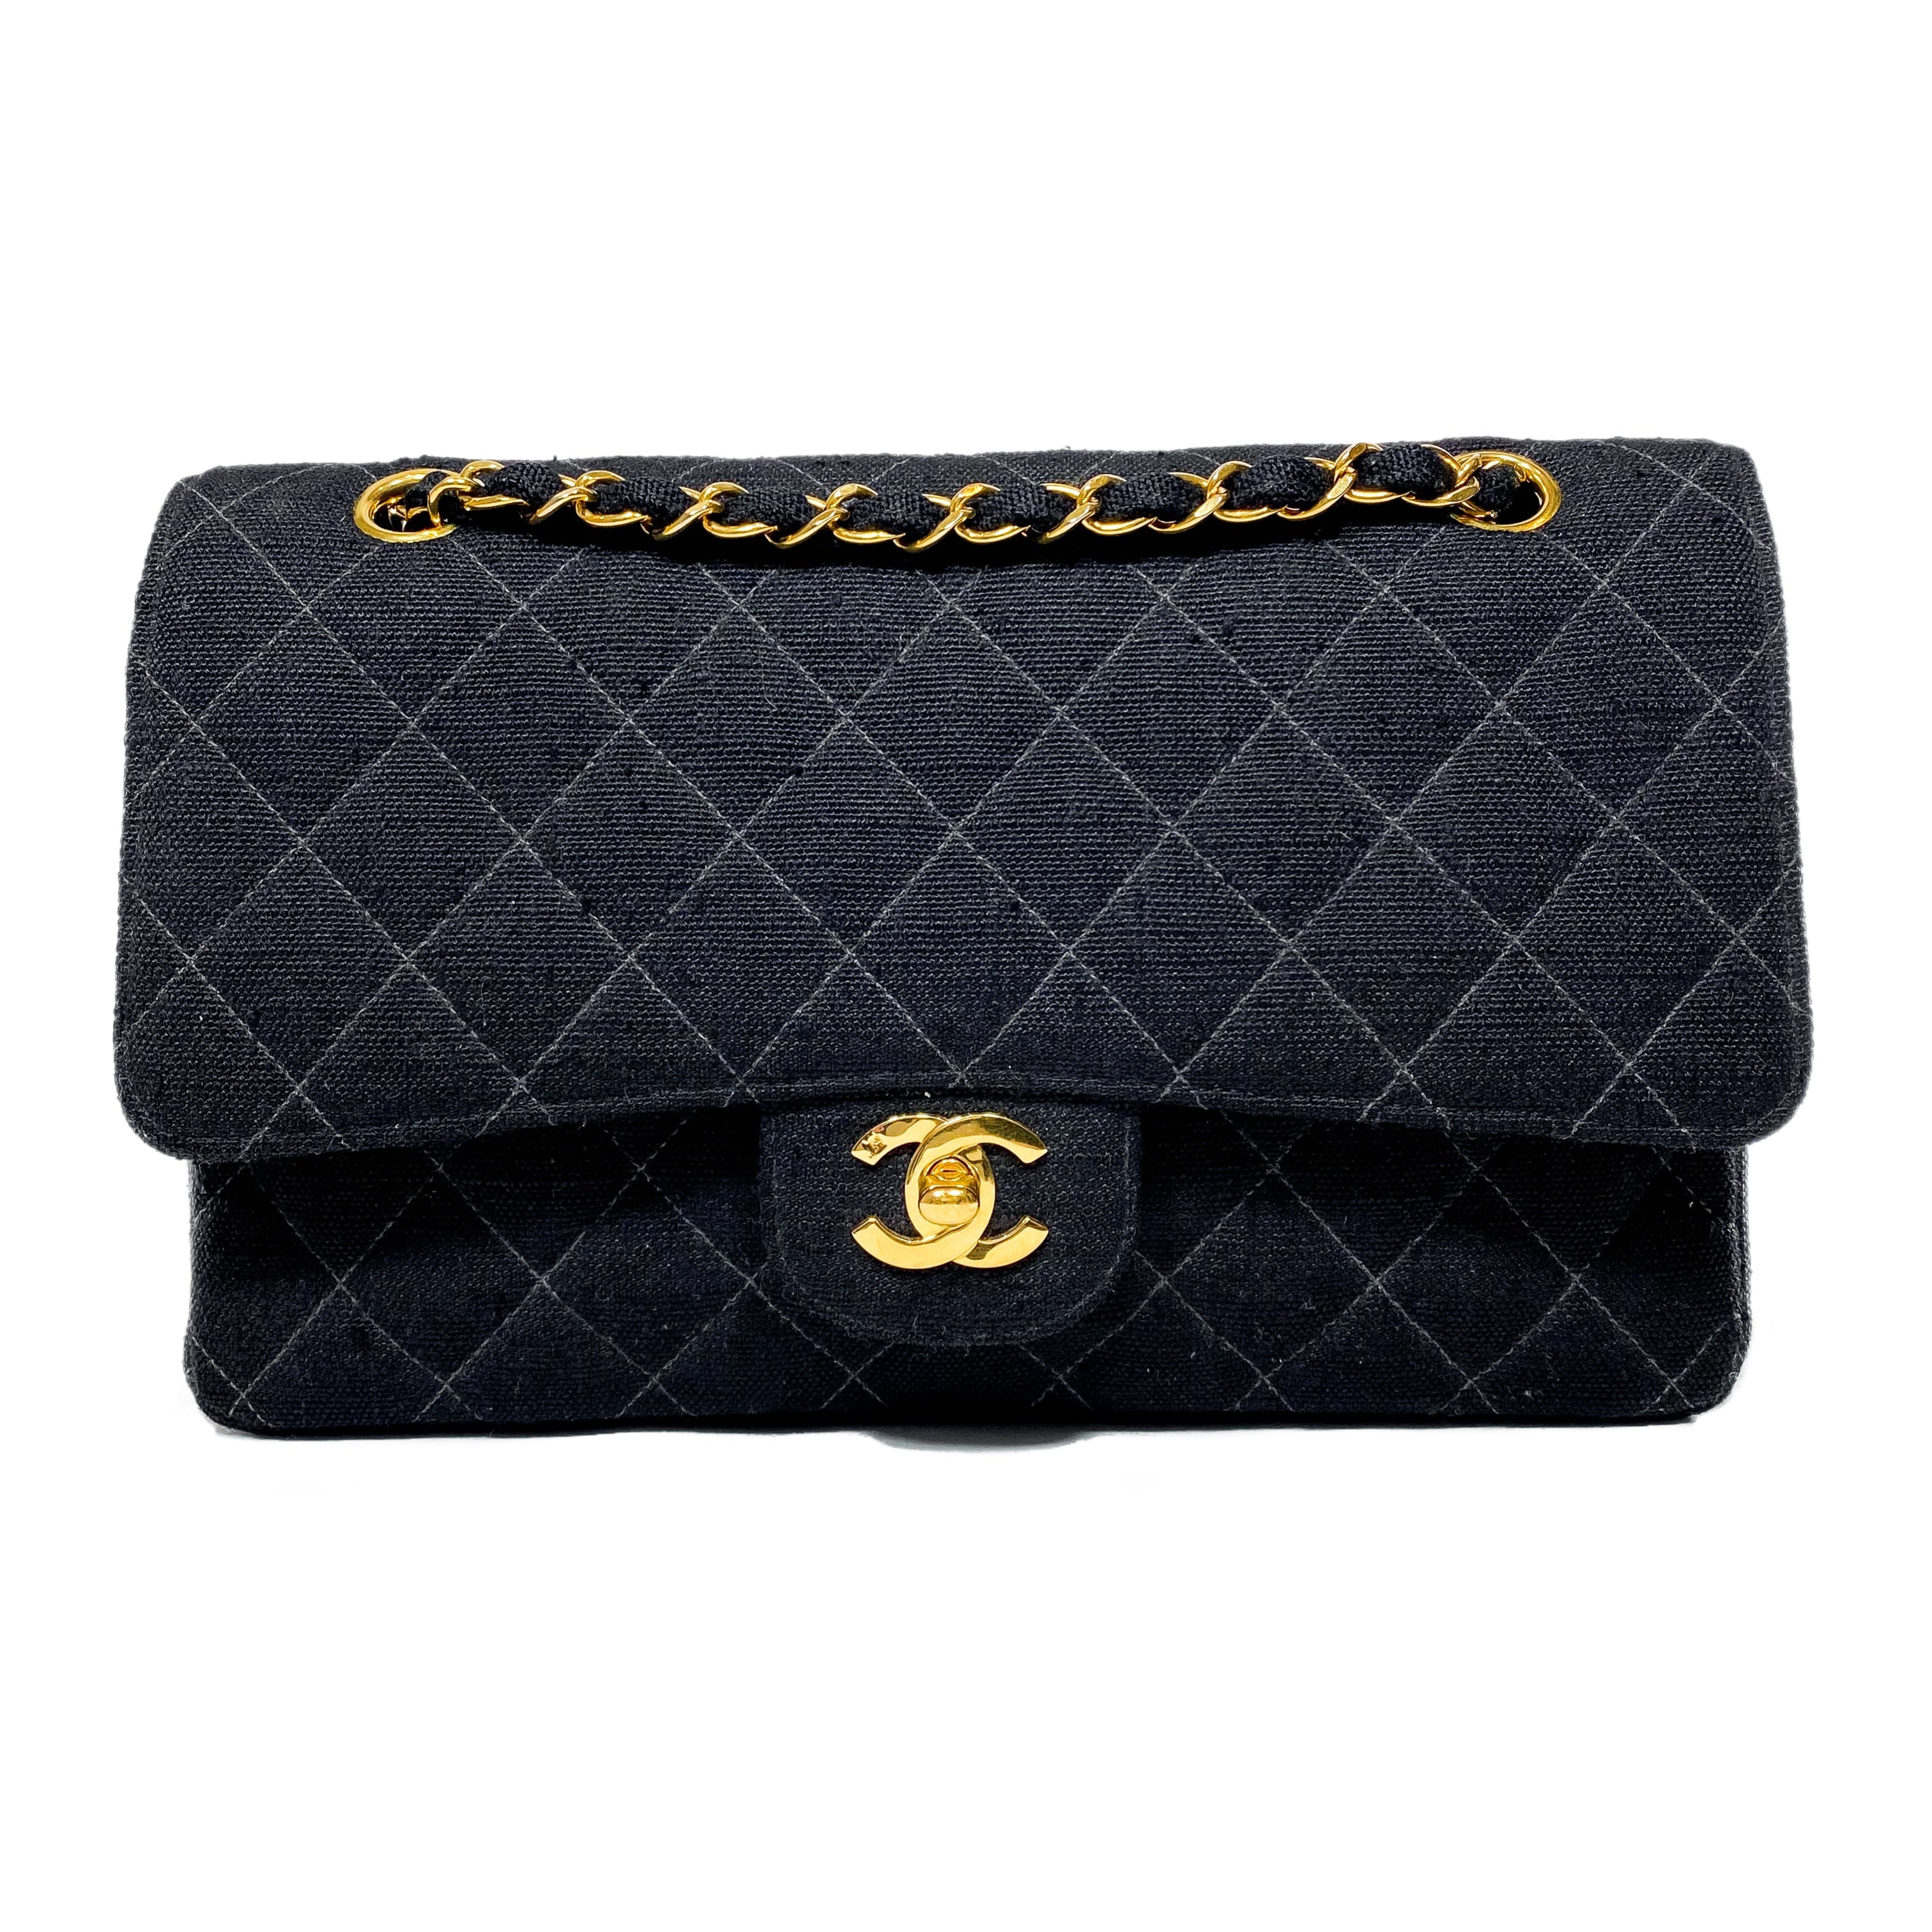 Chanel Black Canvas Medium Double Flap Bag